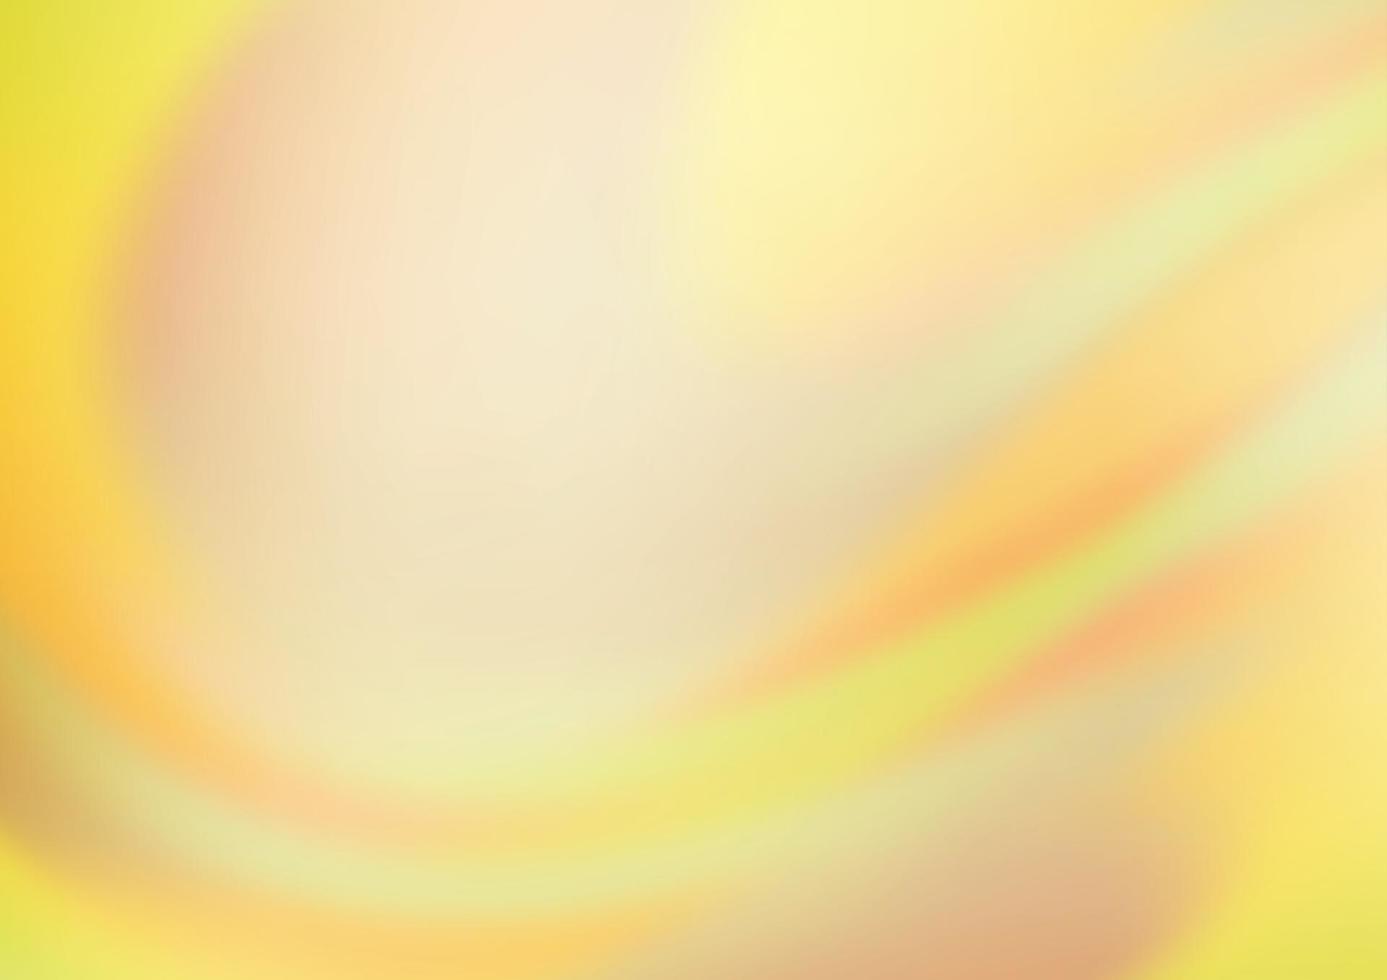 Light Yellow, Orange vector blurred bright pattern.